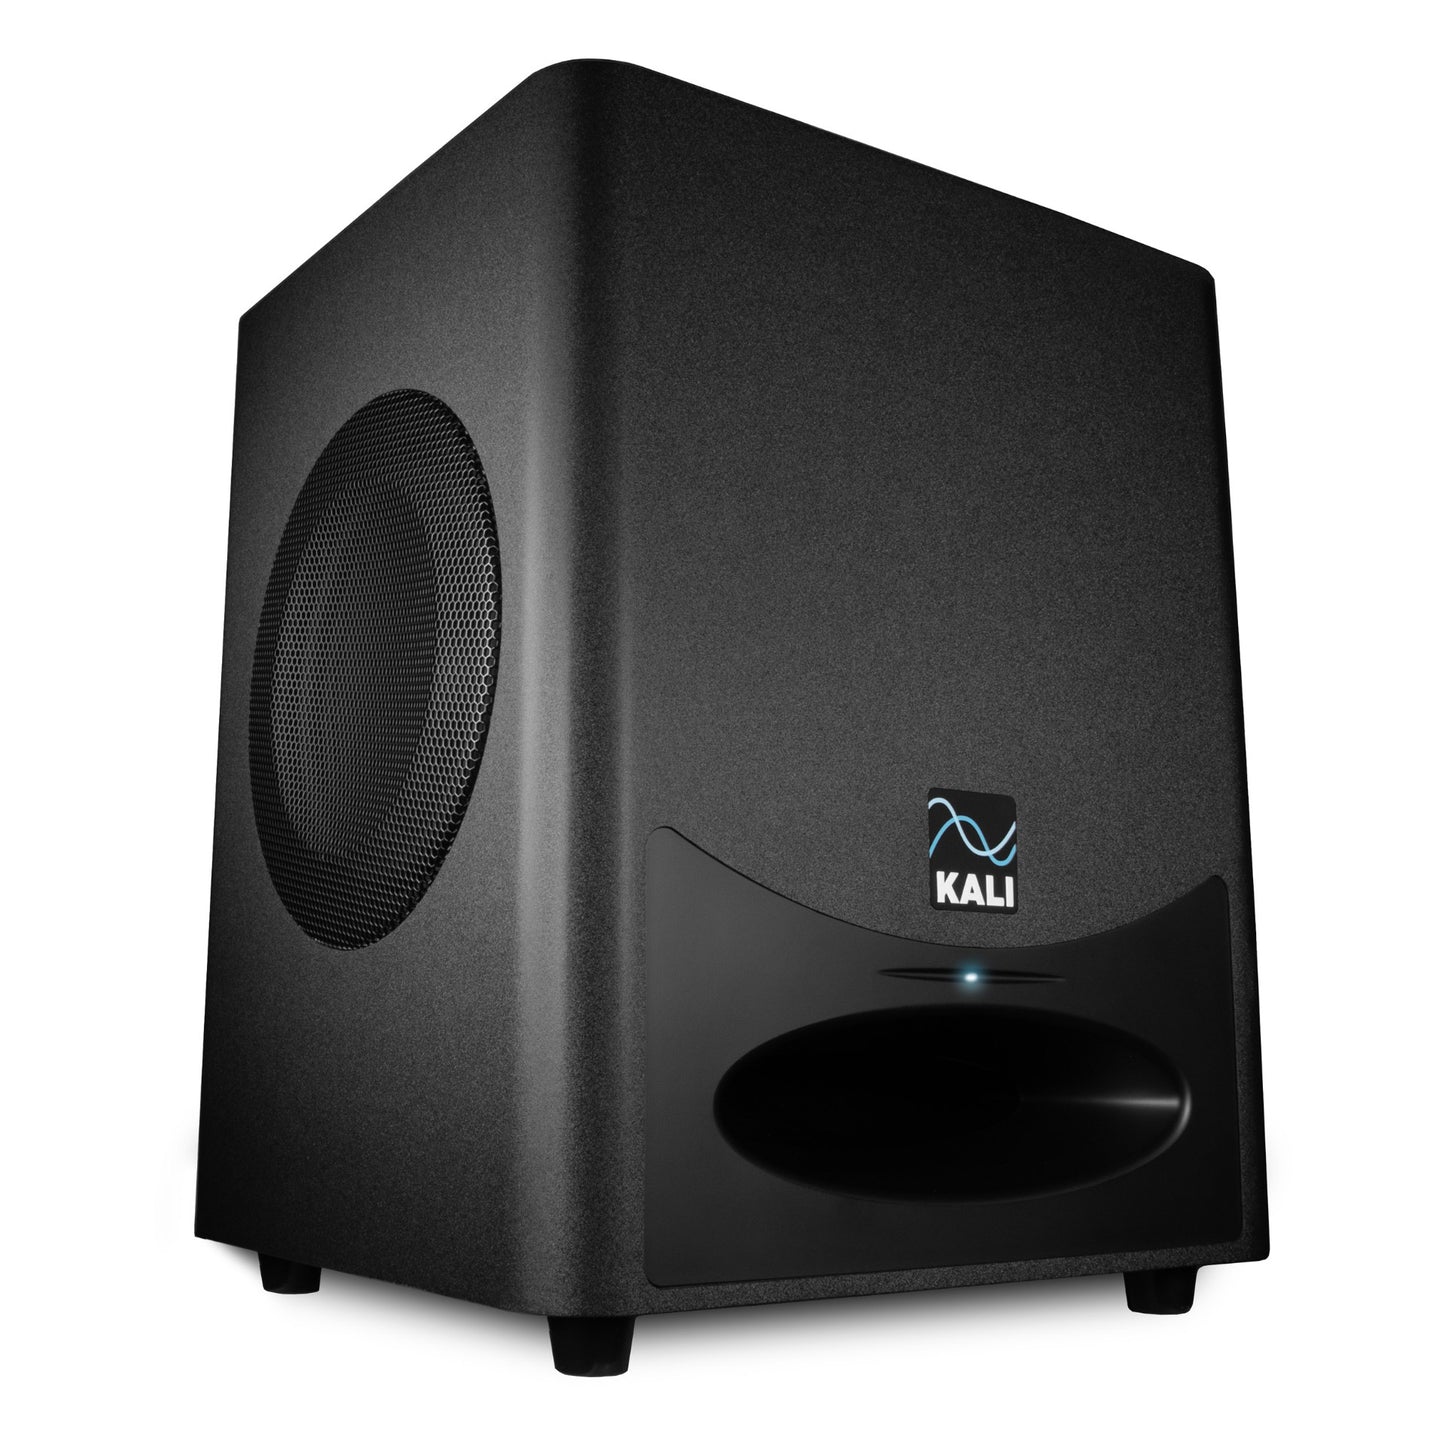 Kali Audio WS-6.2 Dual 6” Subwoofer